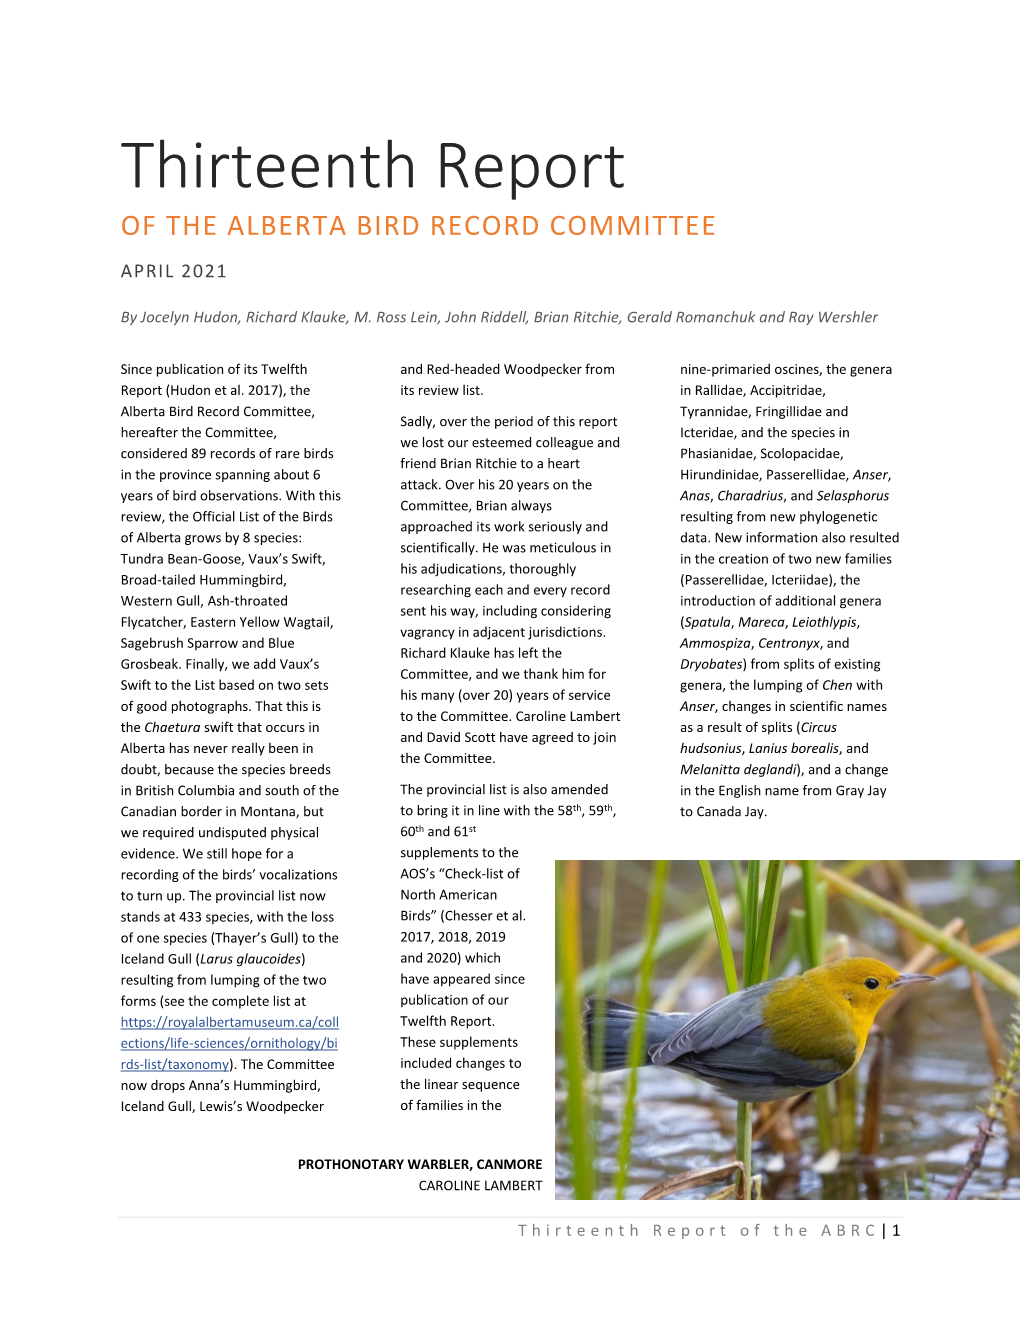 Thirteenth Report of the ALBERTA BIRD RECORD COMMITTEE APRIL 2021